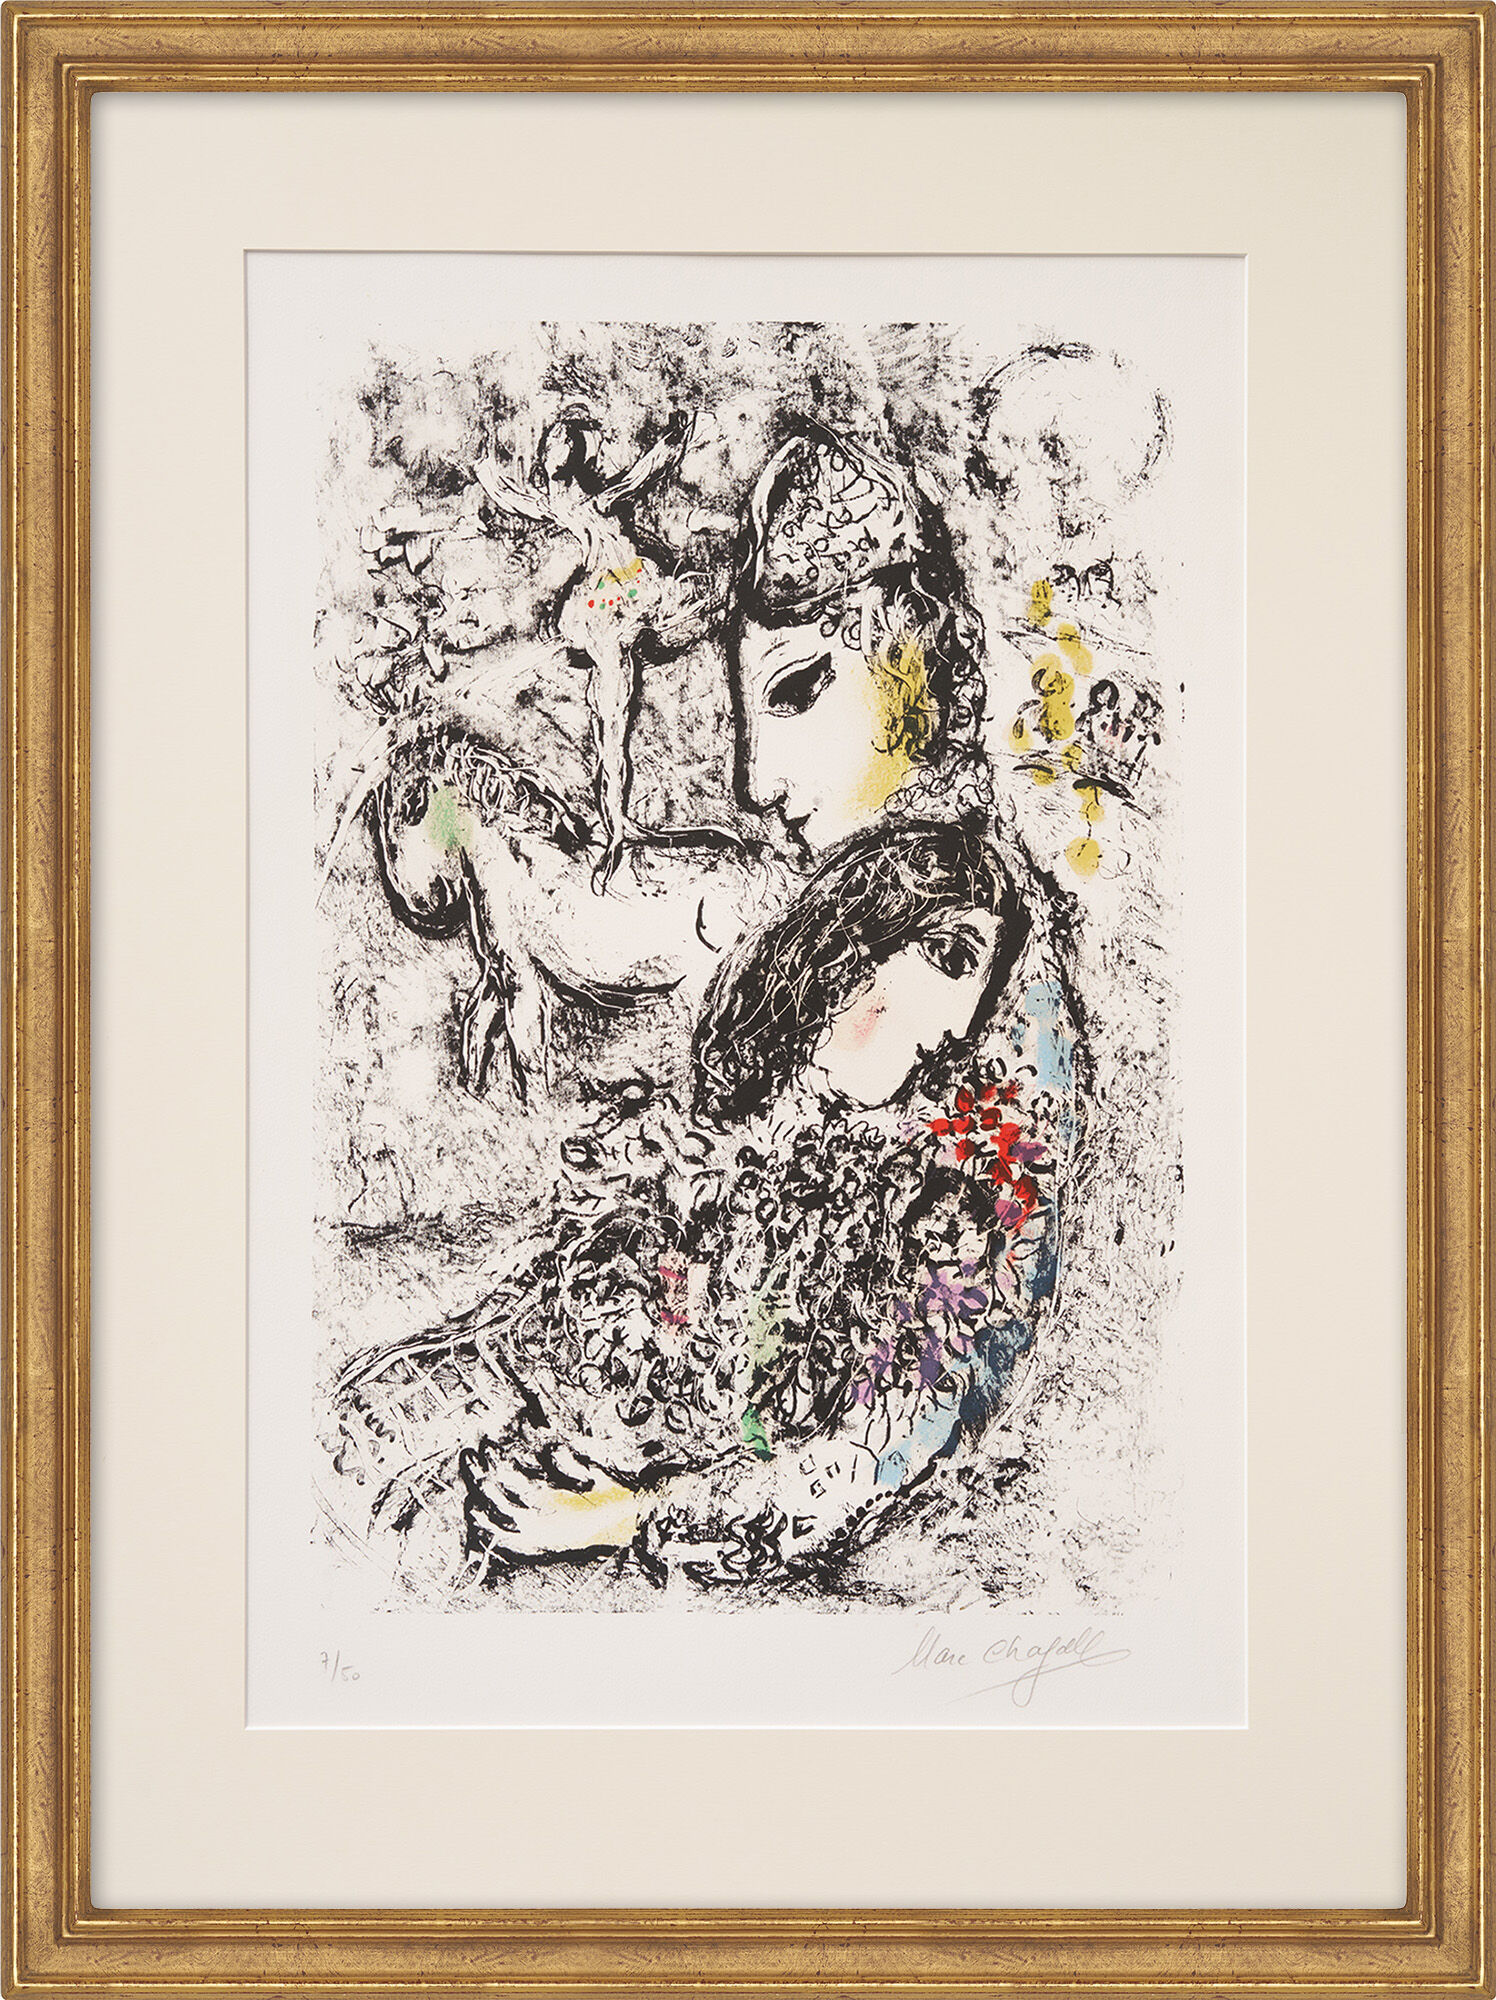 Picture "Les Enchanteurs "(1969) by Marc Chagall